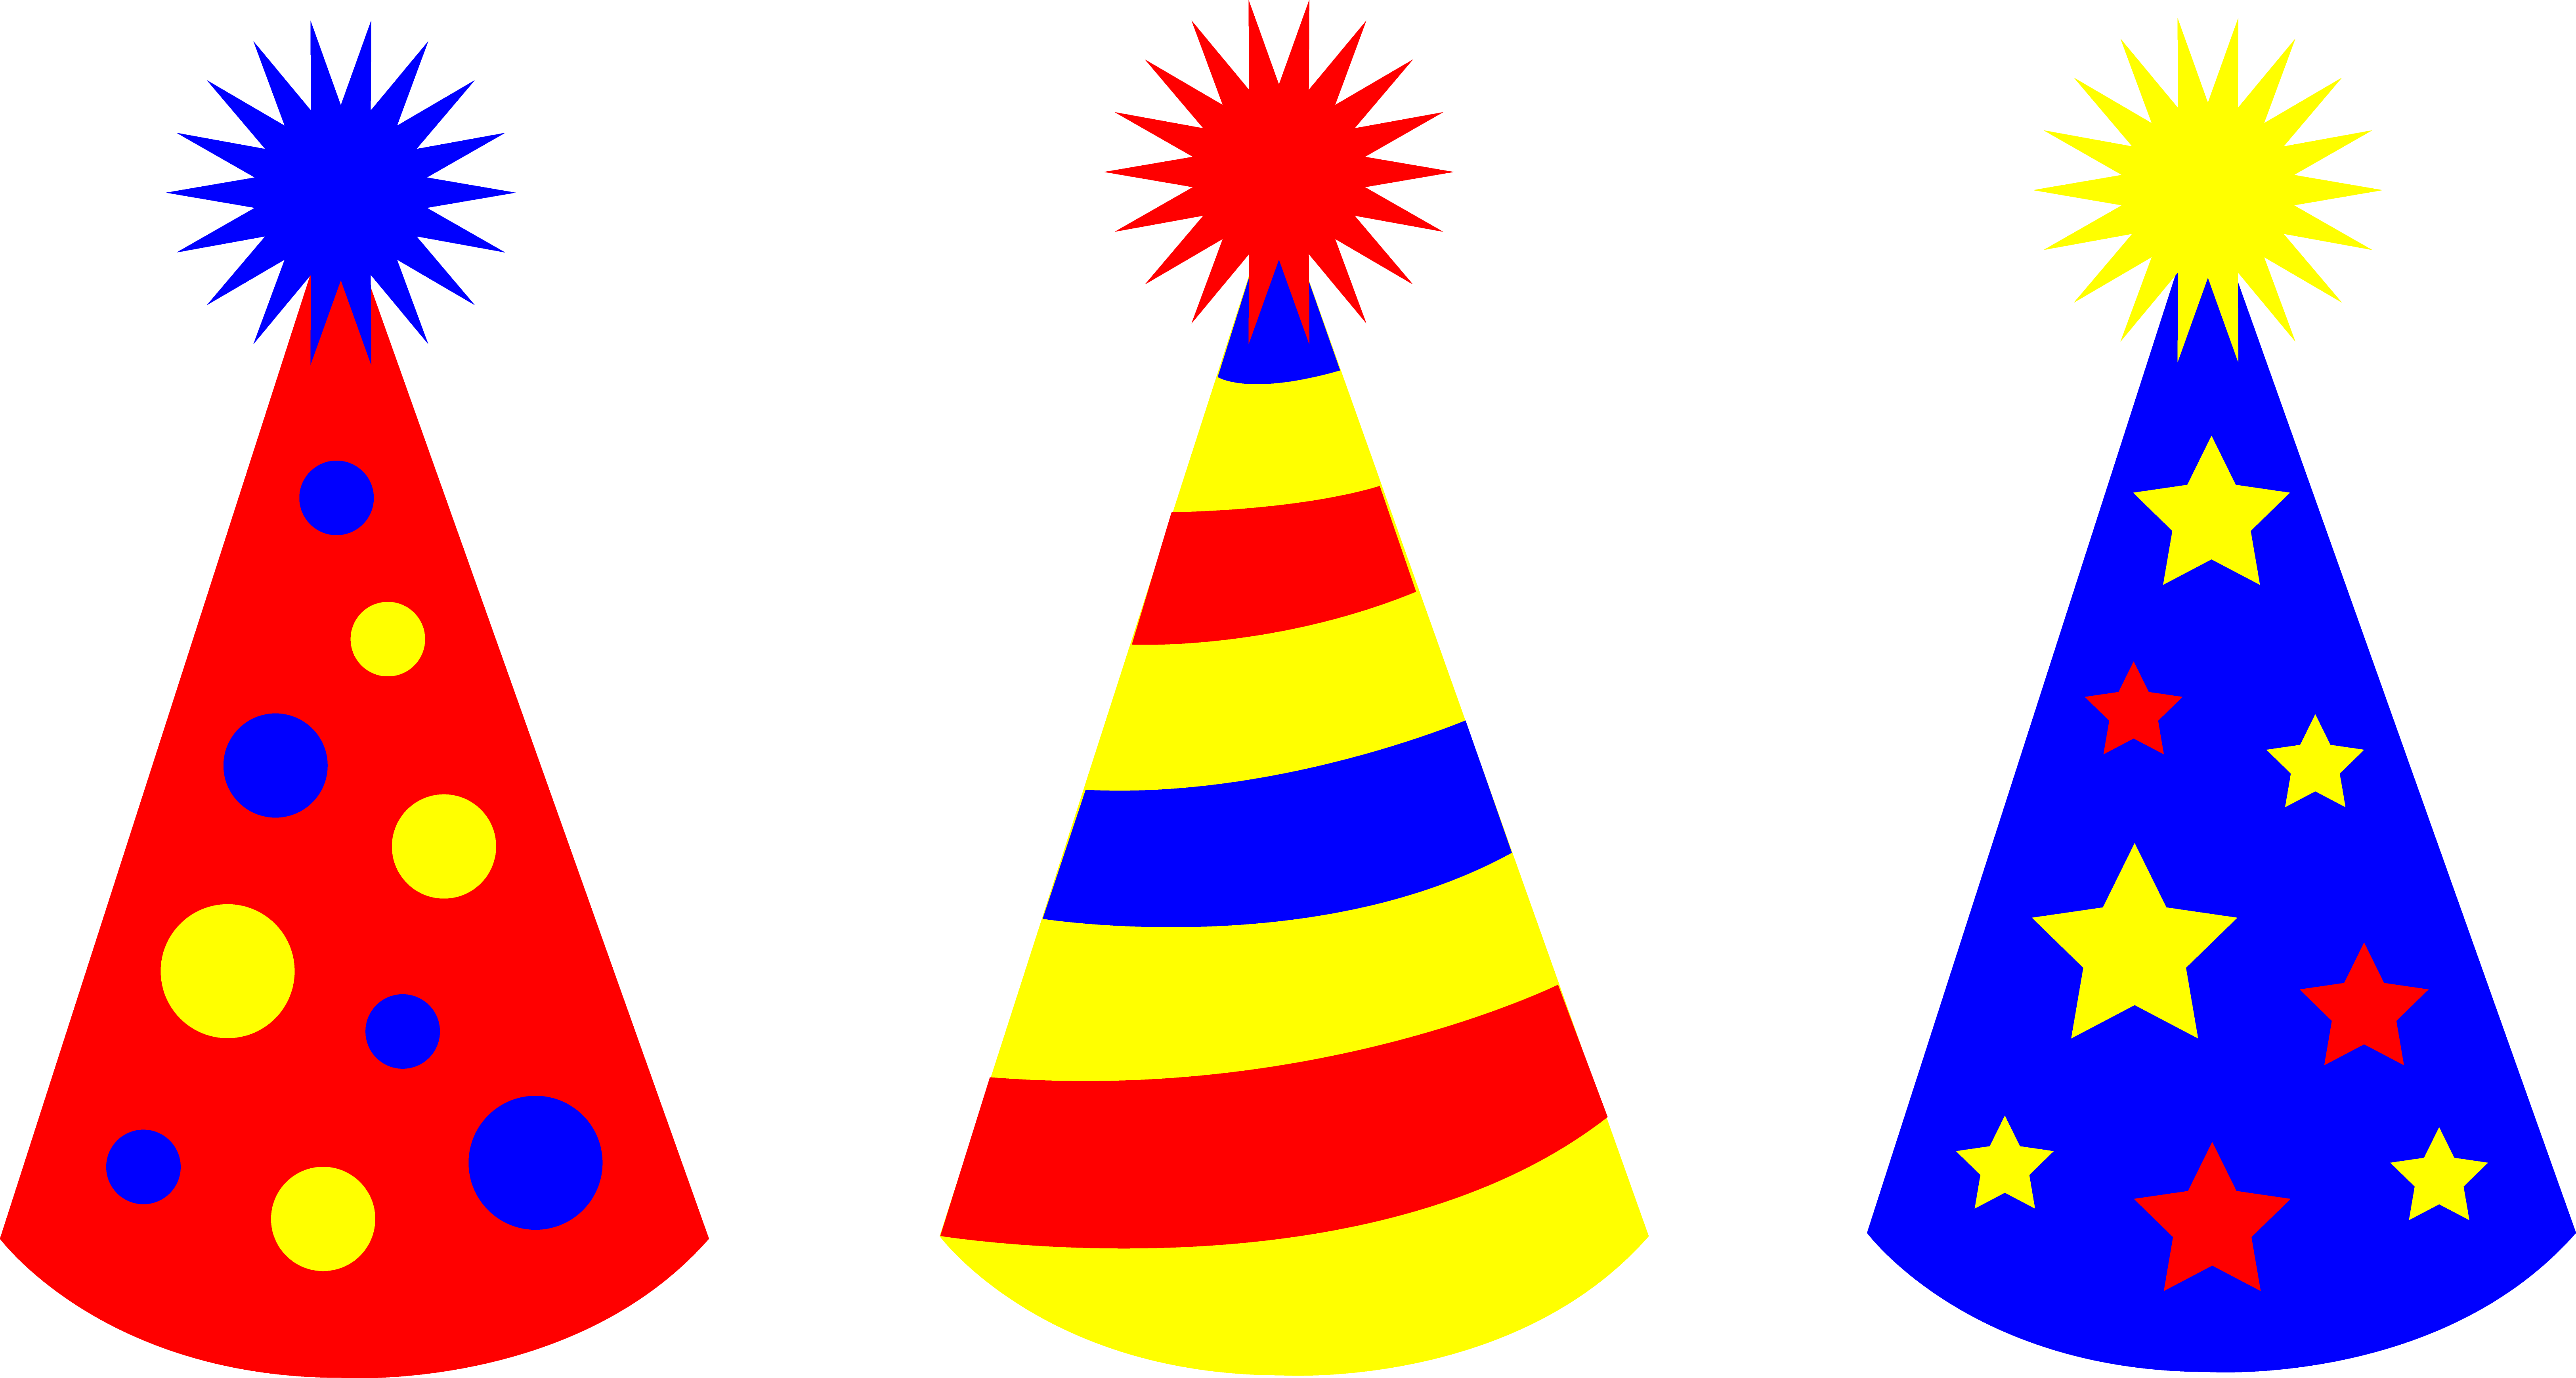 Birthday Party Hat Clip Art